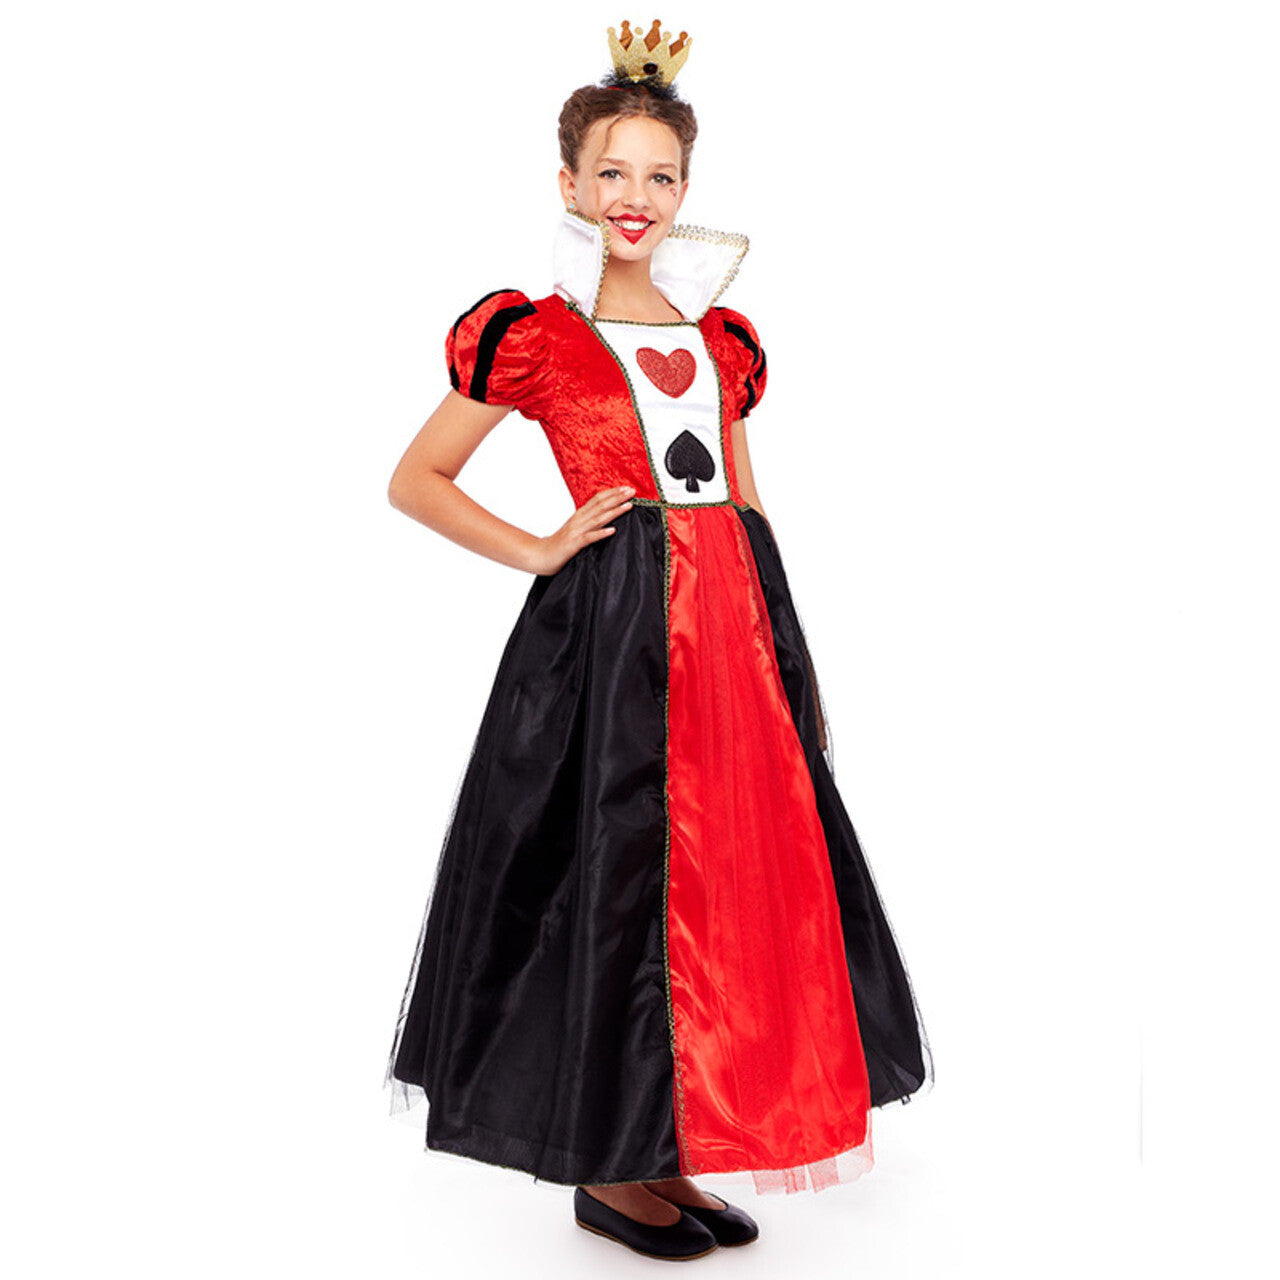 Acqusita online costume da Regina di Cuori glamour infantile